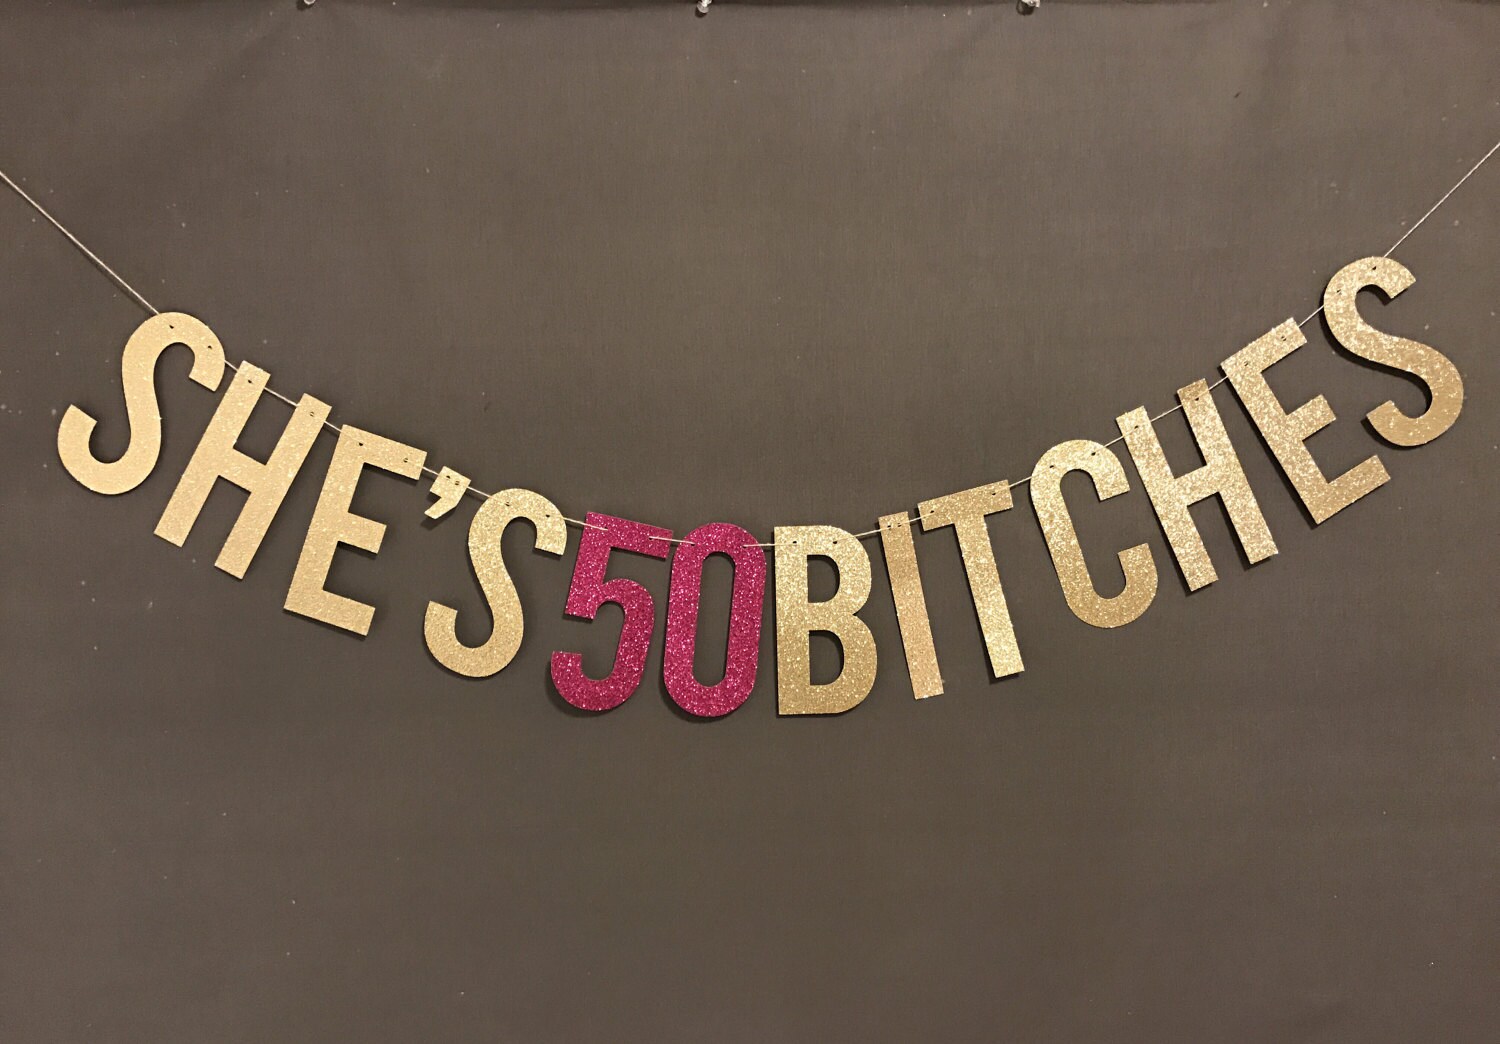  50th birthday 50th birthday party banner Birthday Party